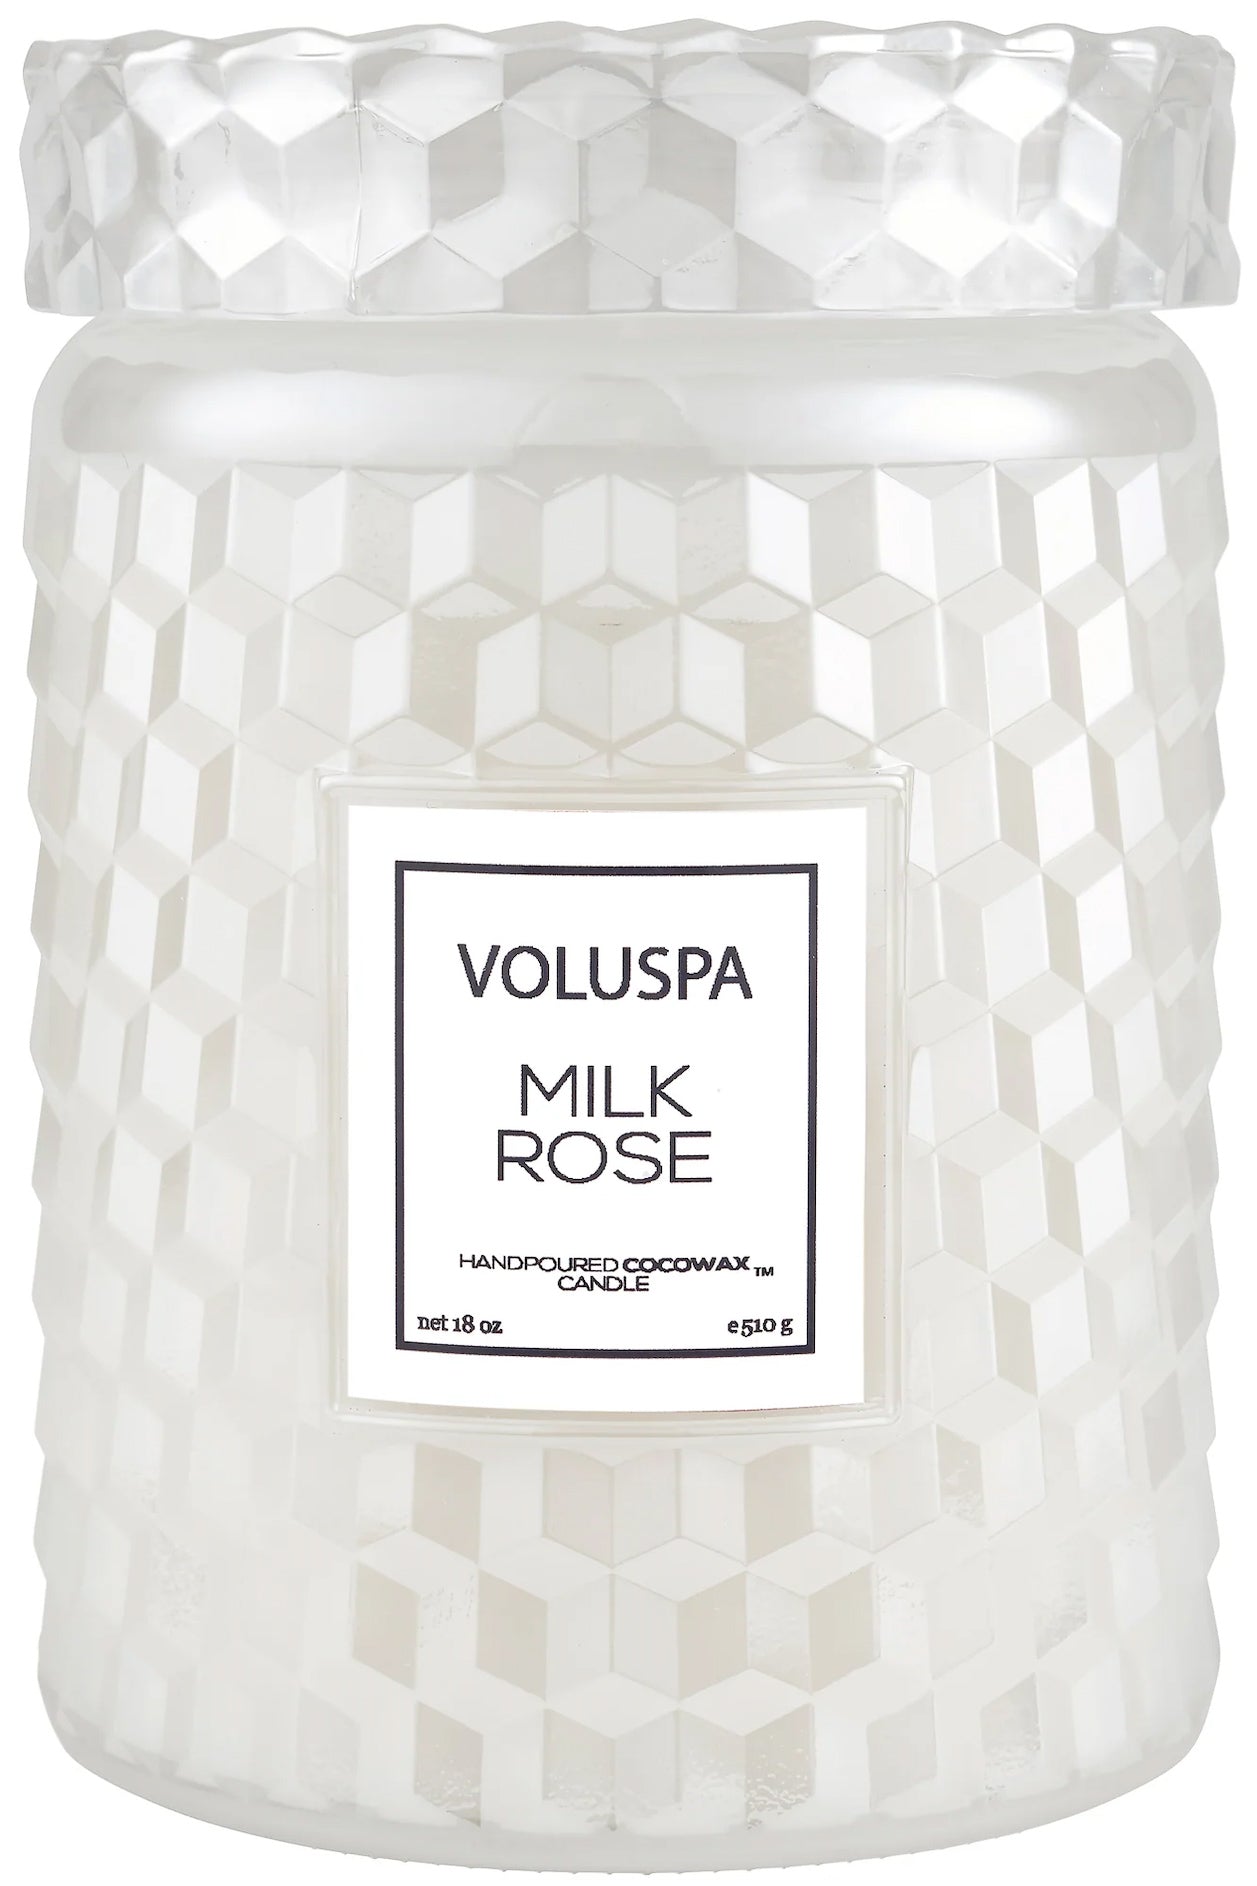 Voluspa Large Glass Jar Candle - 18 oz - MILK ROSE